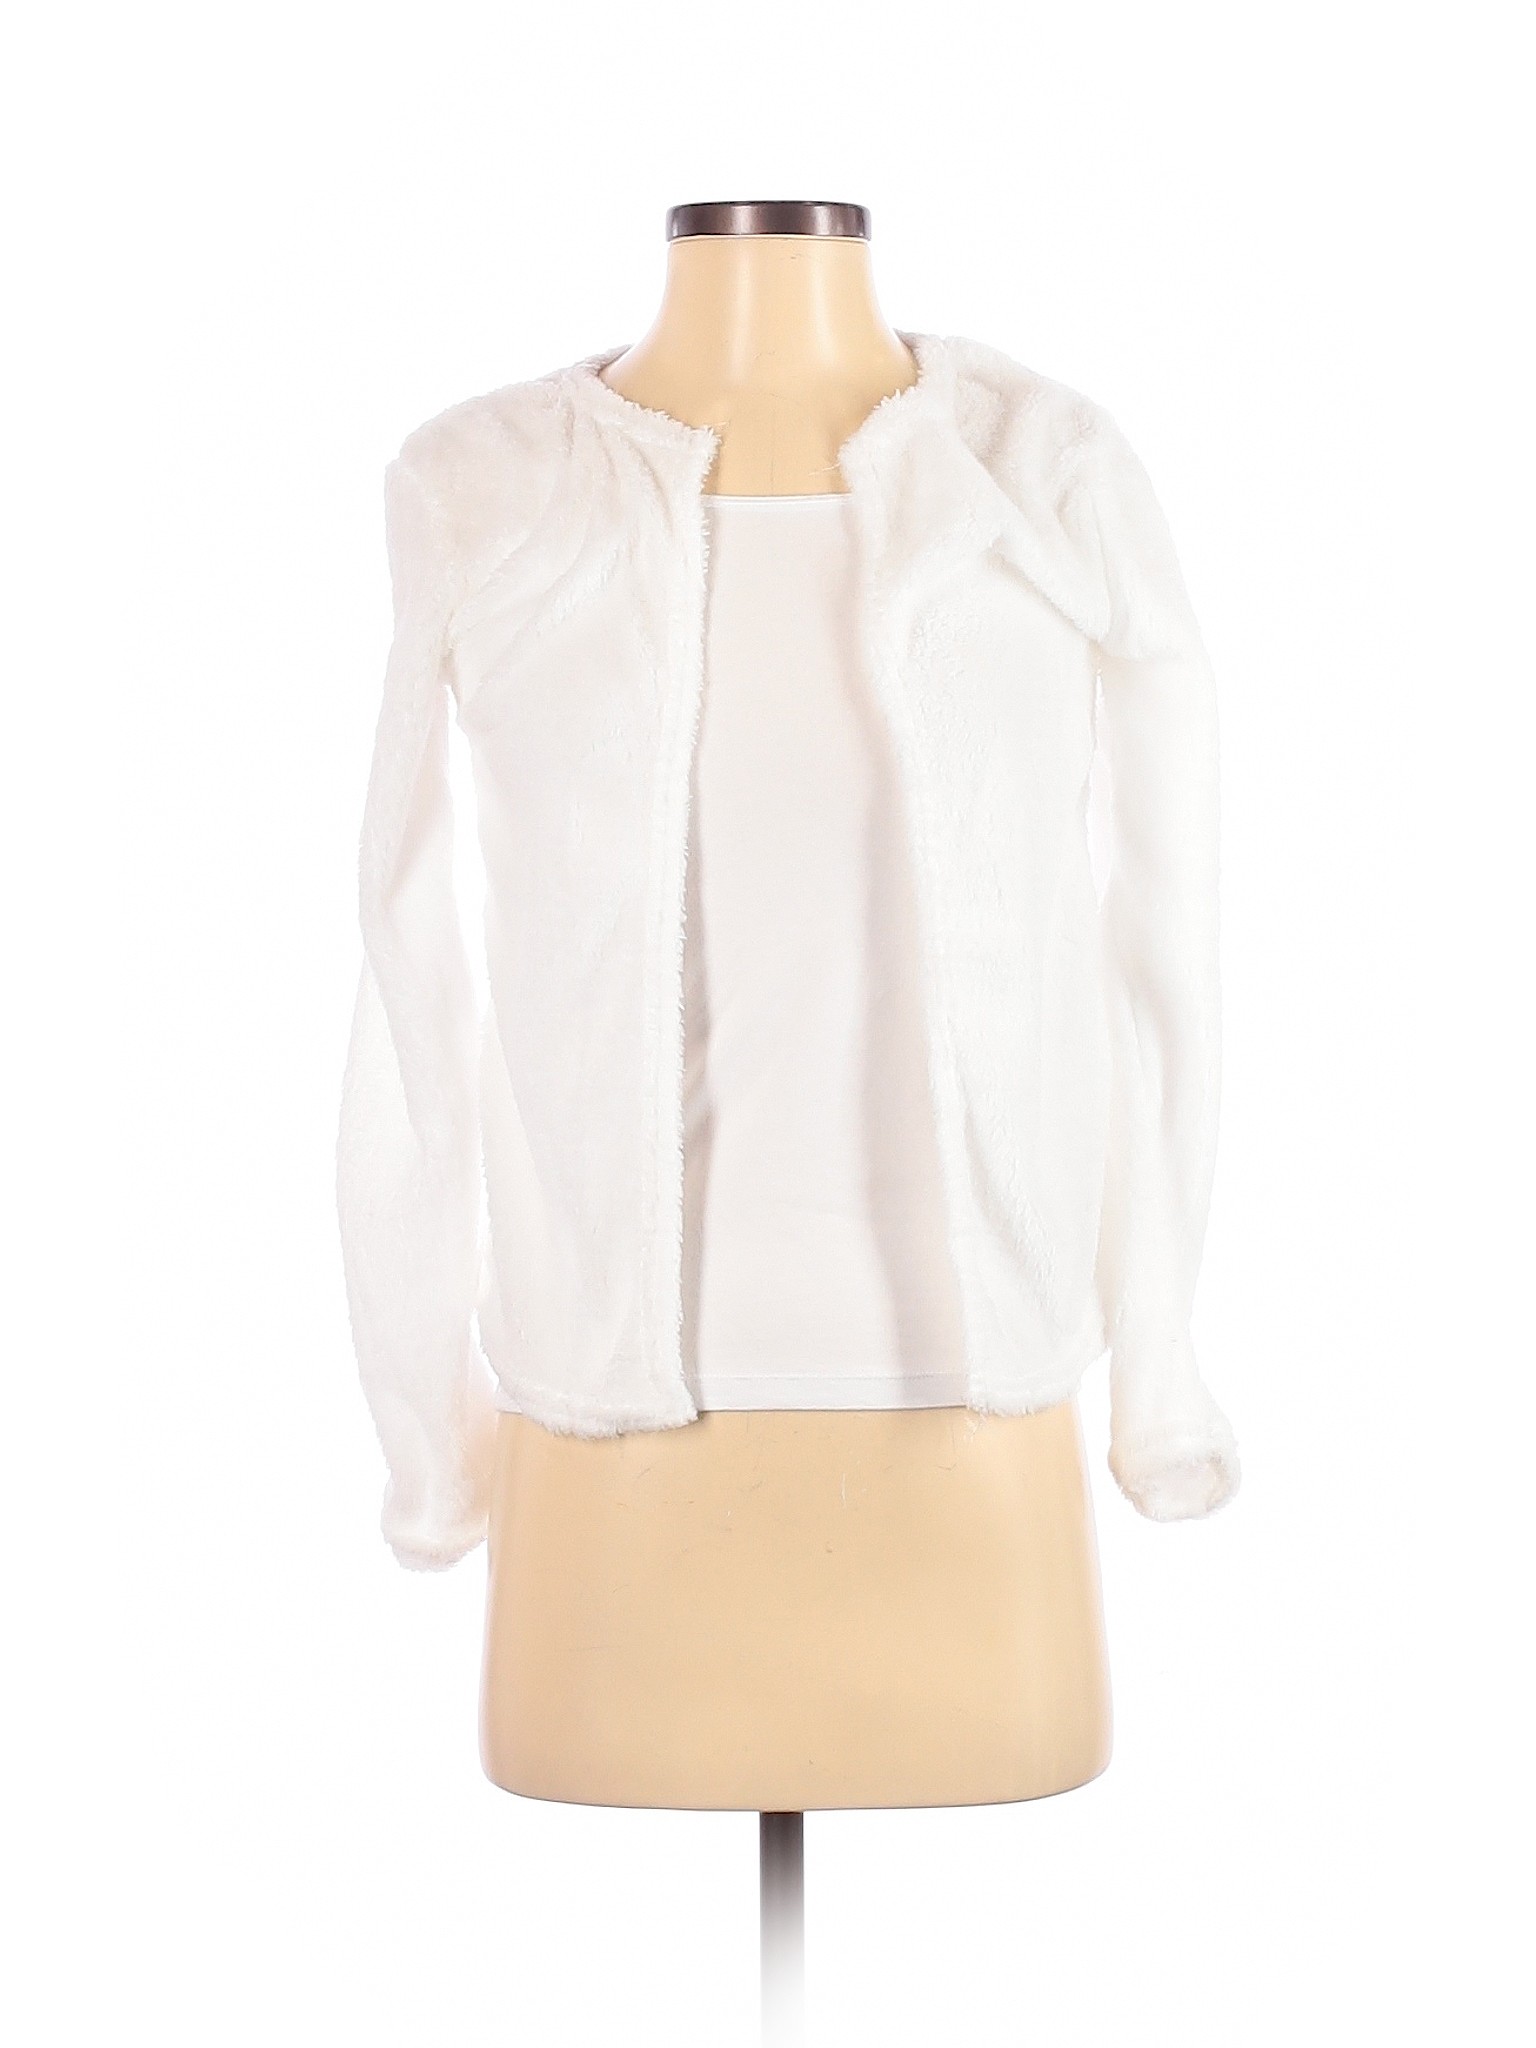 Unbranded Women White Cardigan S | eBay